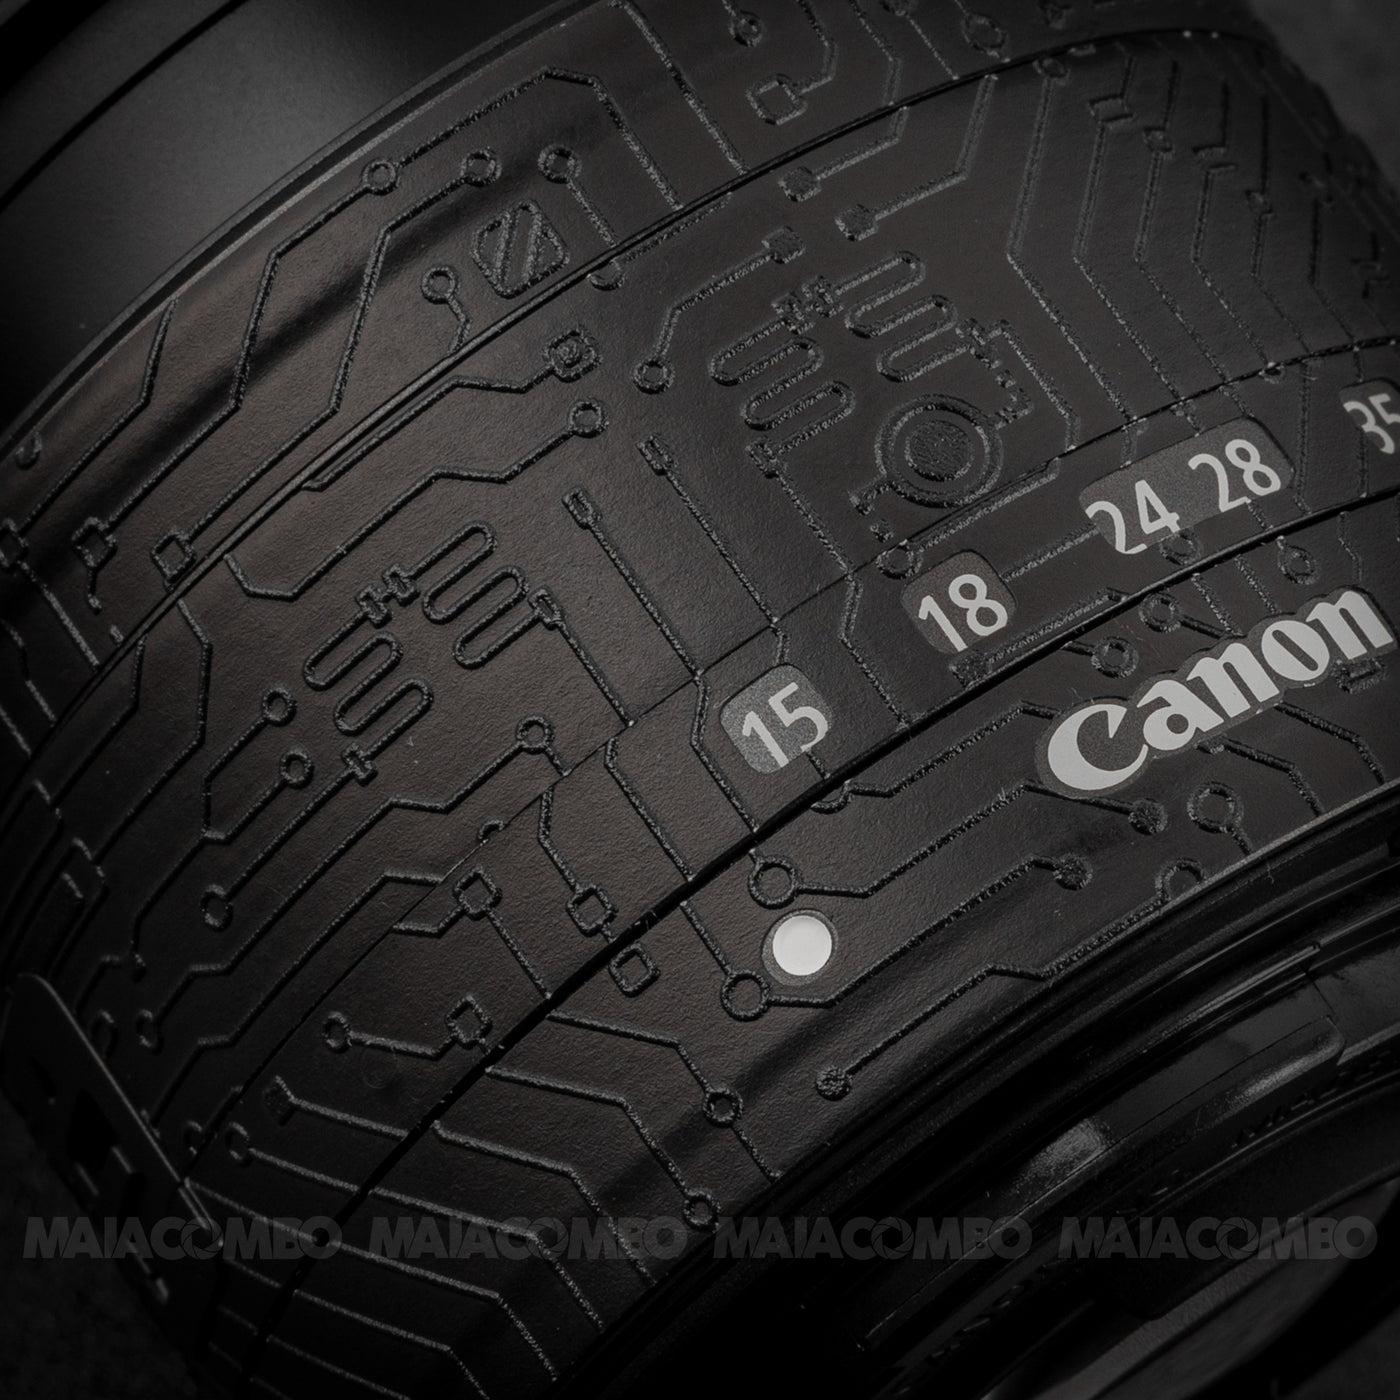 Canon EF-M 15-45mm f3.5-6.3 IS STM Lens Skin/ Wrap